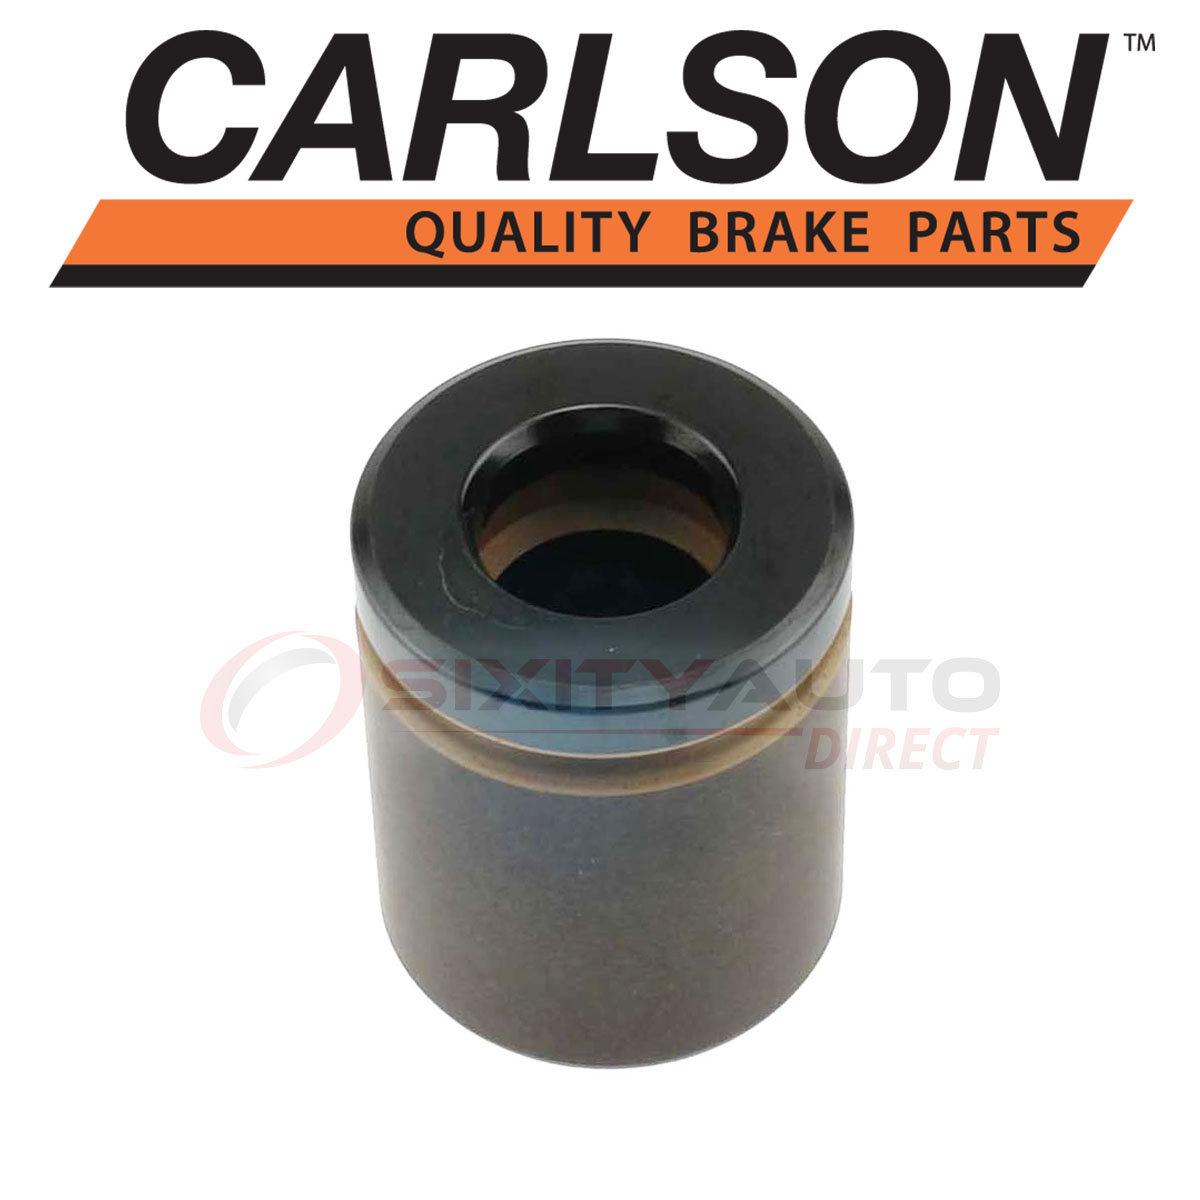 145.54008 Centric Brake Caliper Piston Front or Rear New for Le Baron Ram Truck